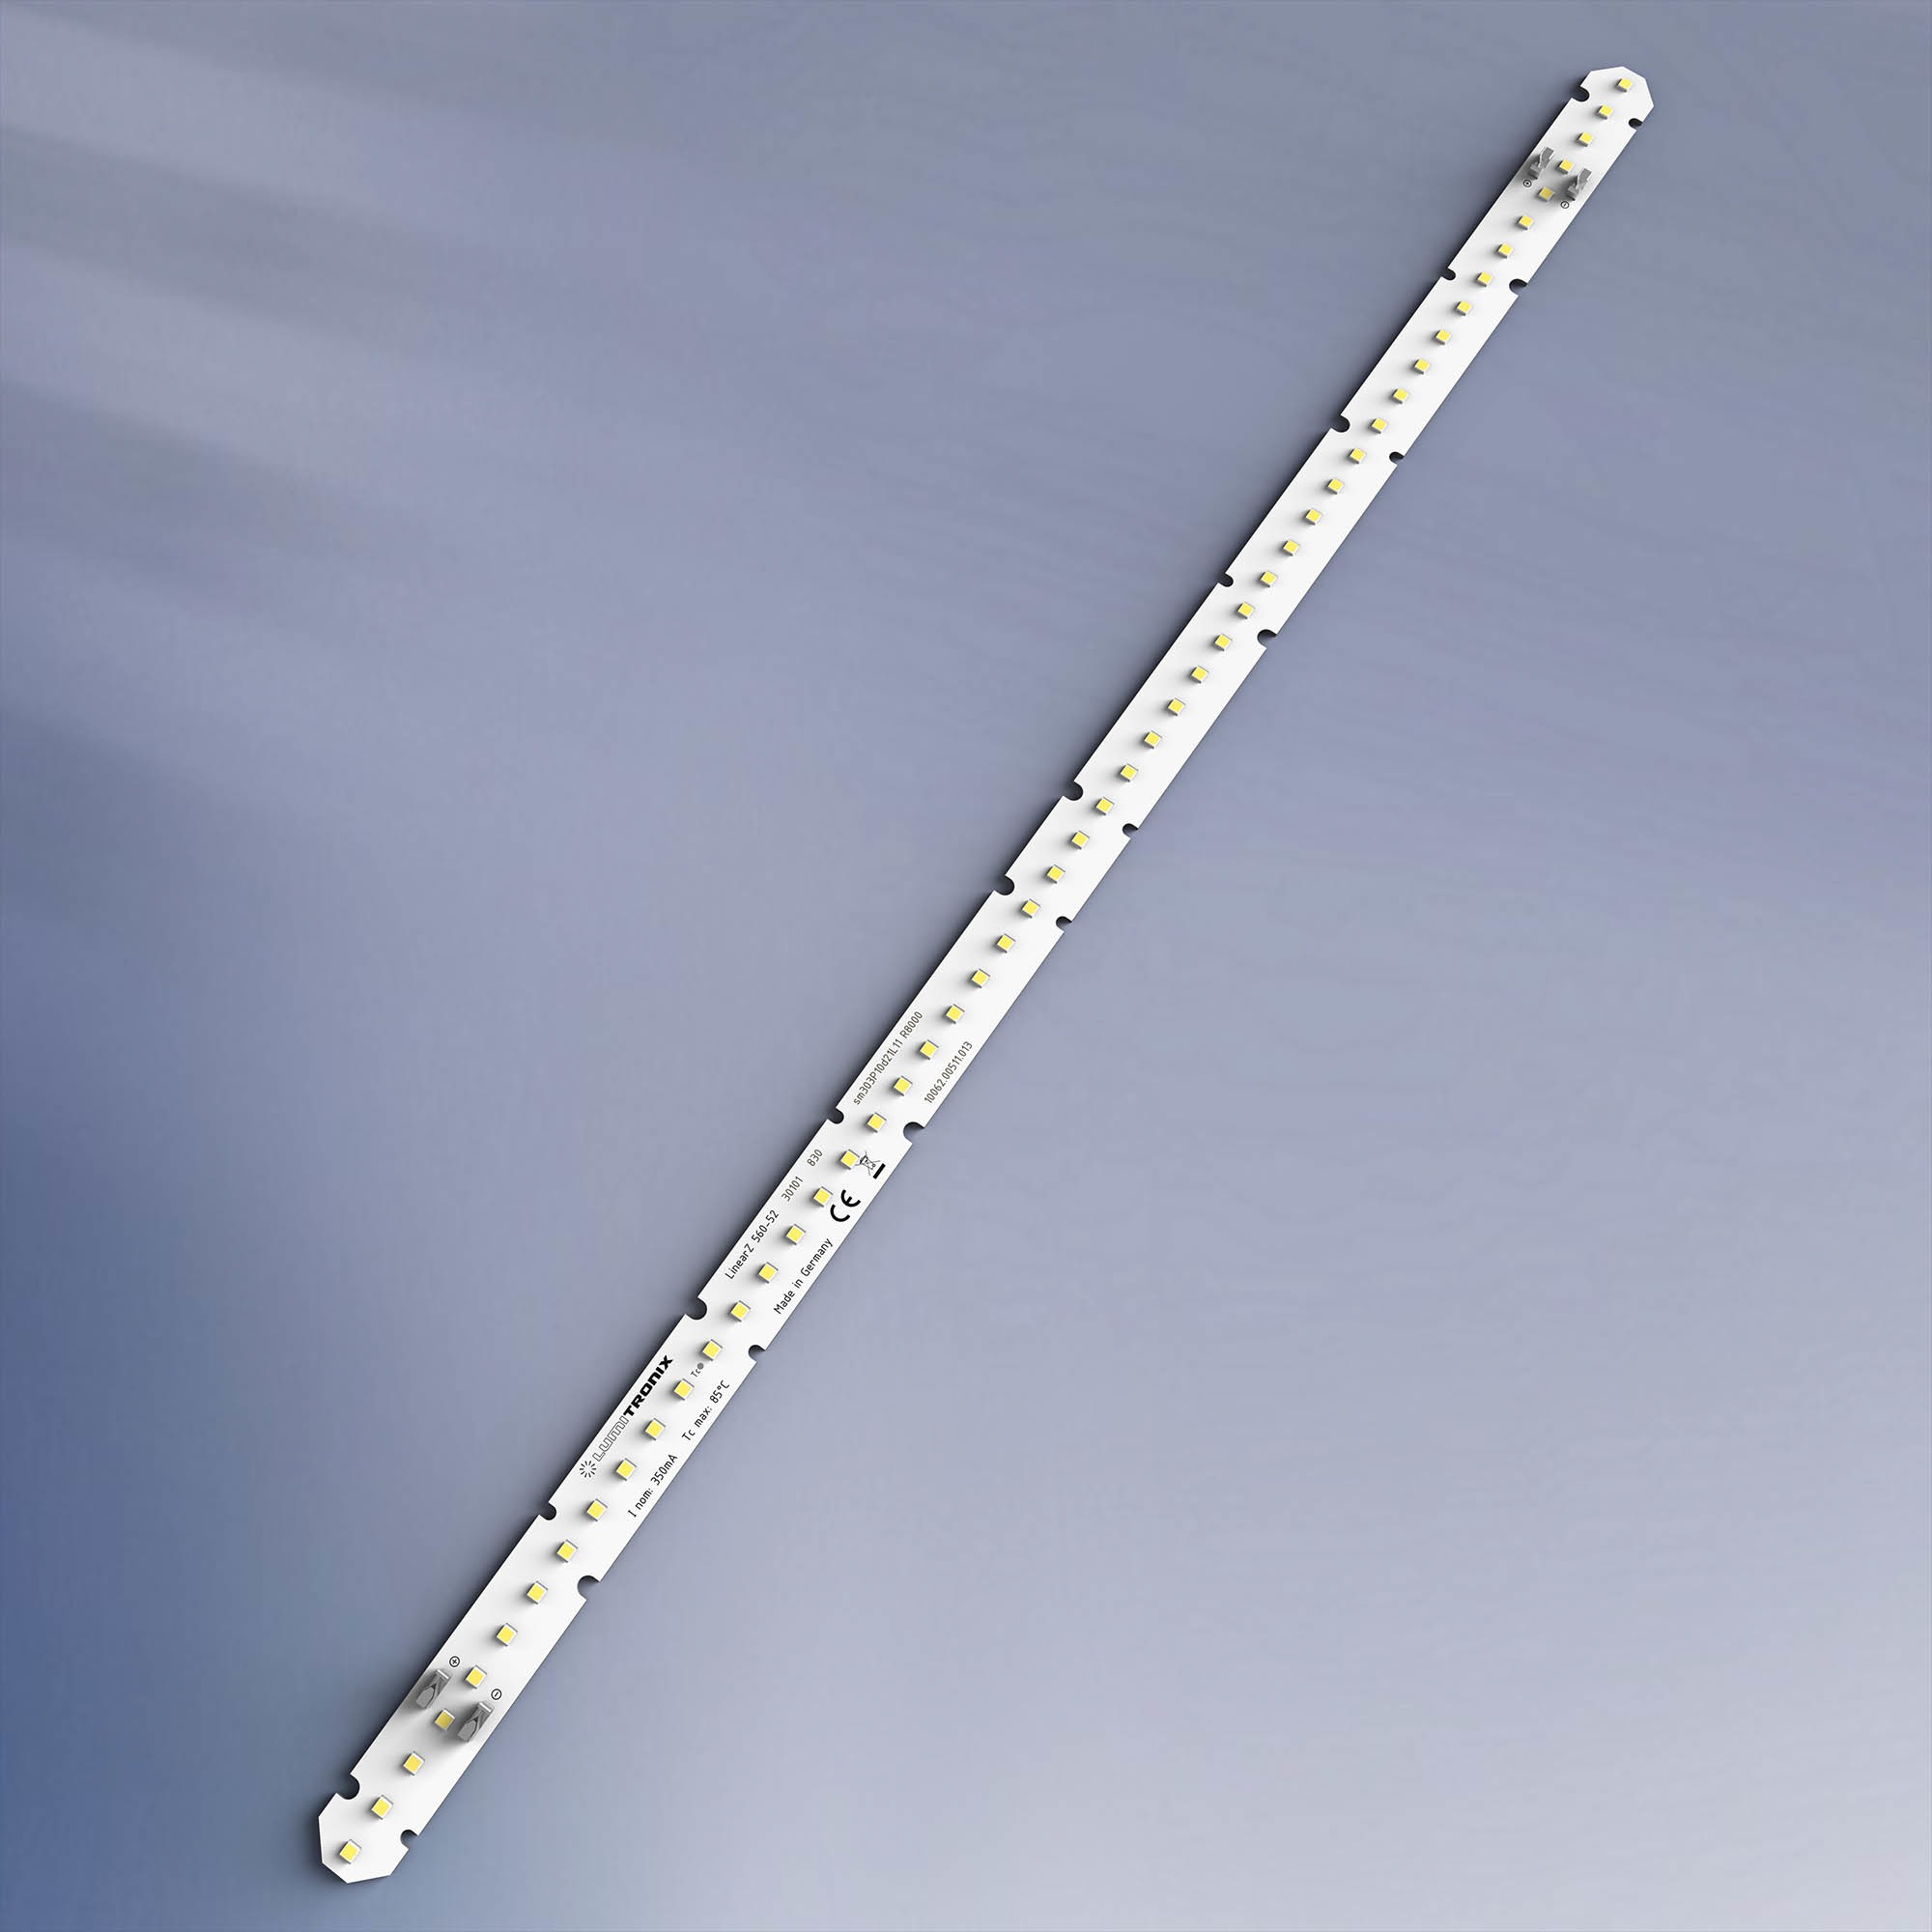 LumiBar-52-RSP Horticulture Nichia Rsp0a LED Strip Zhaga pure white 5000K 28PPF 1780lm 350mA 37.5V 52 LEDs 56cm module (3179lm/m 24W/m) 